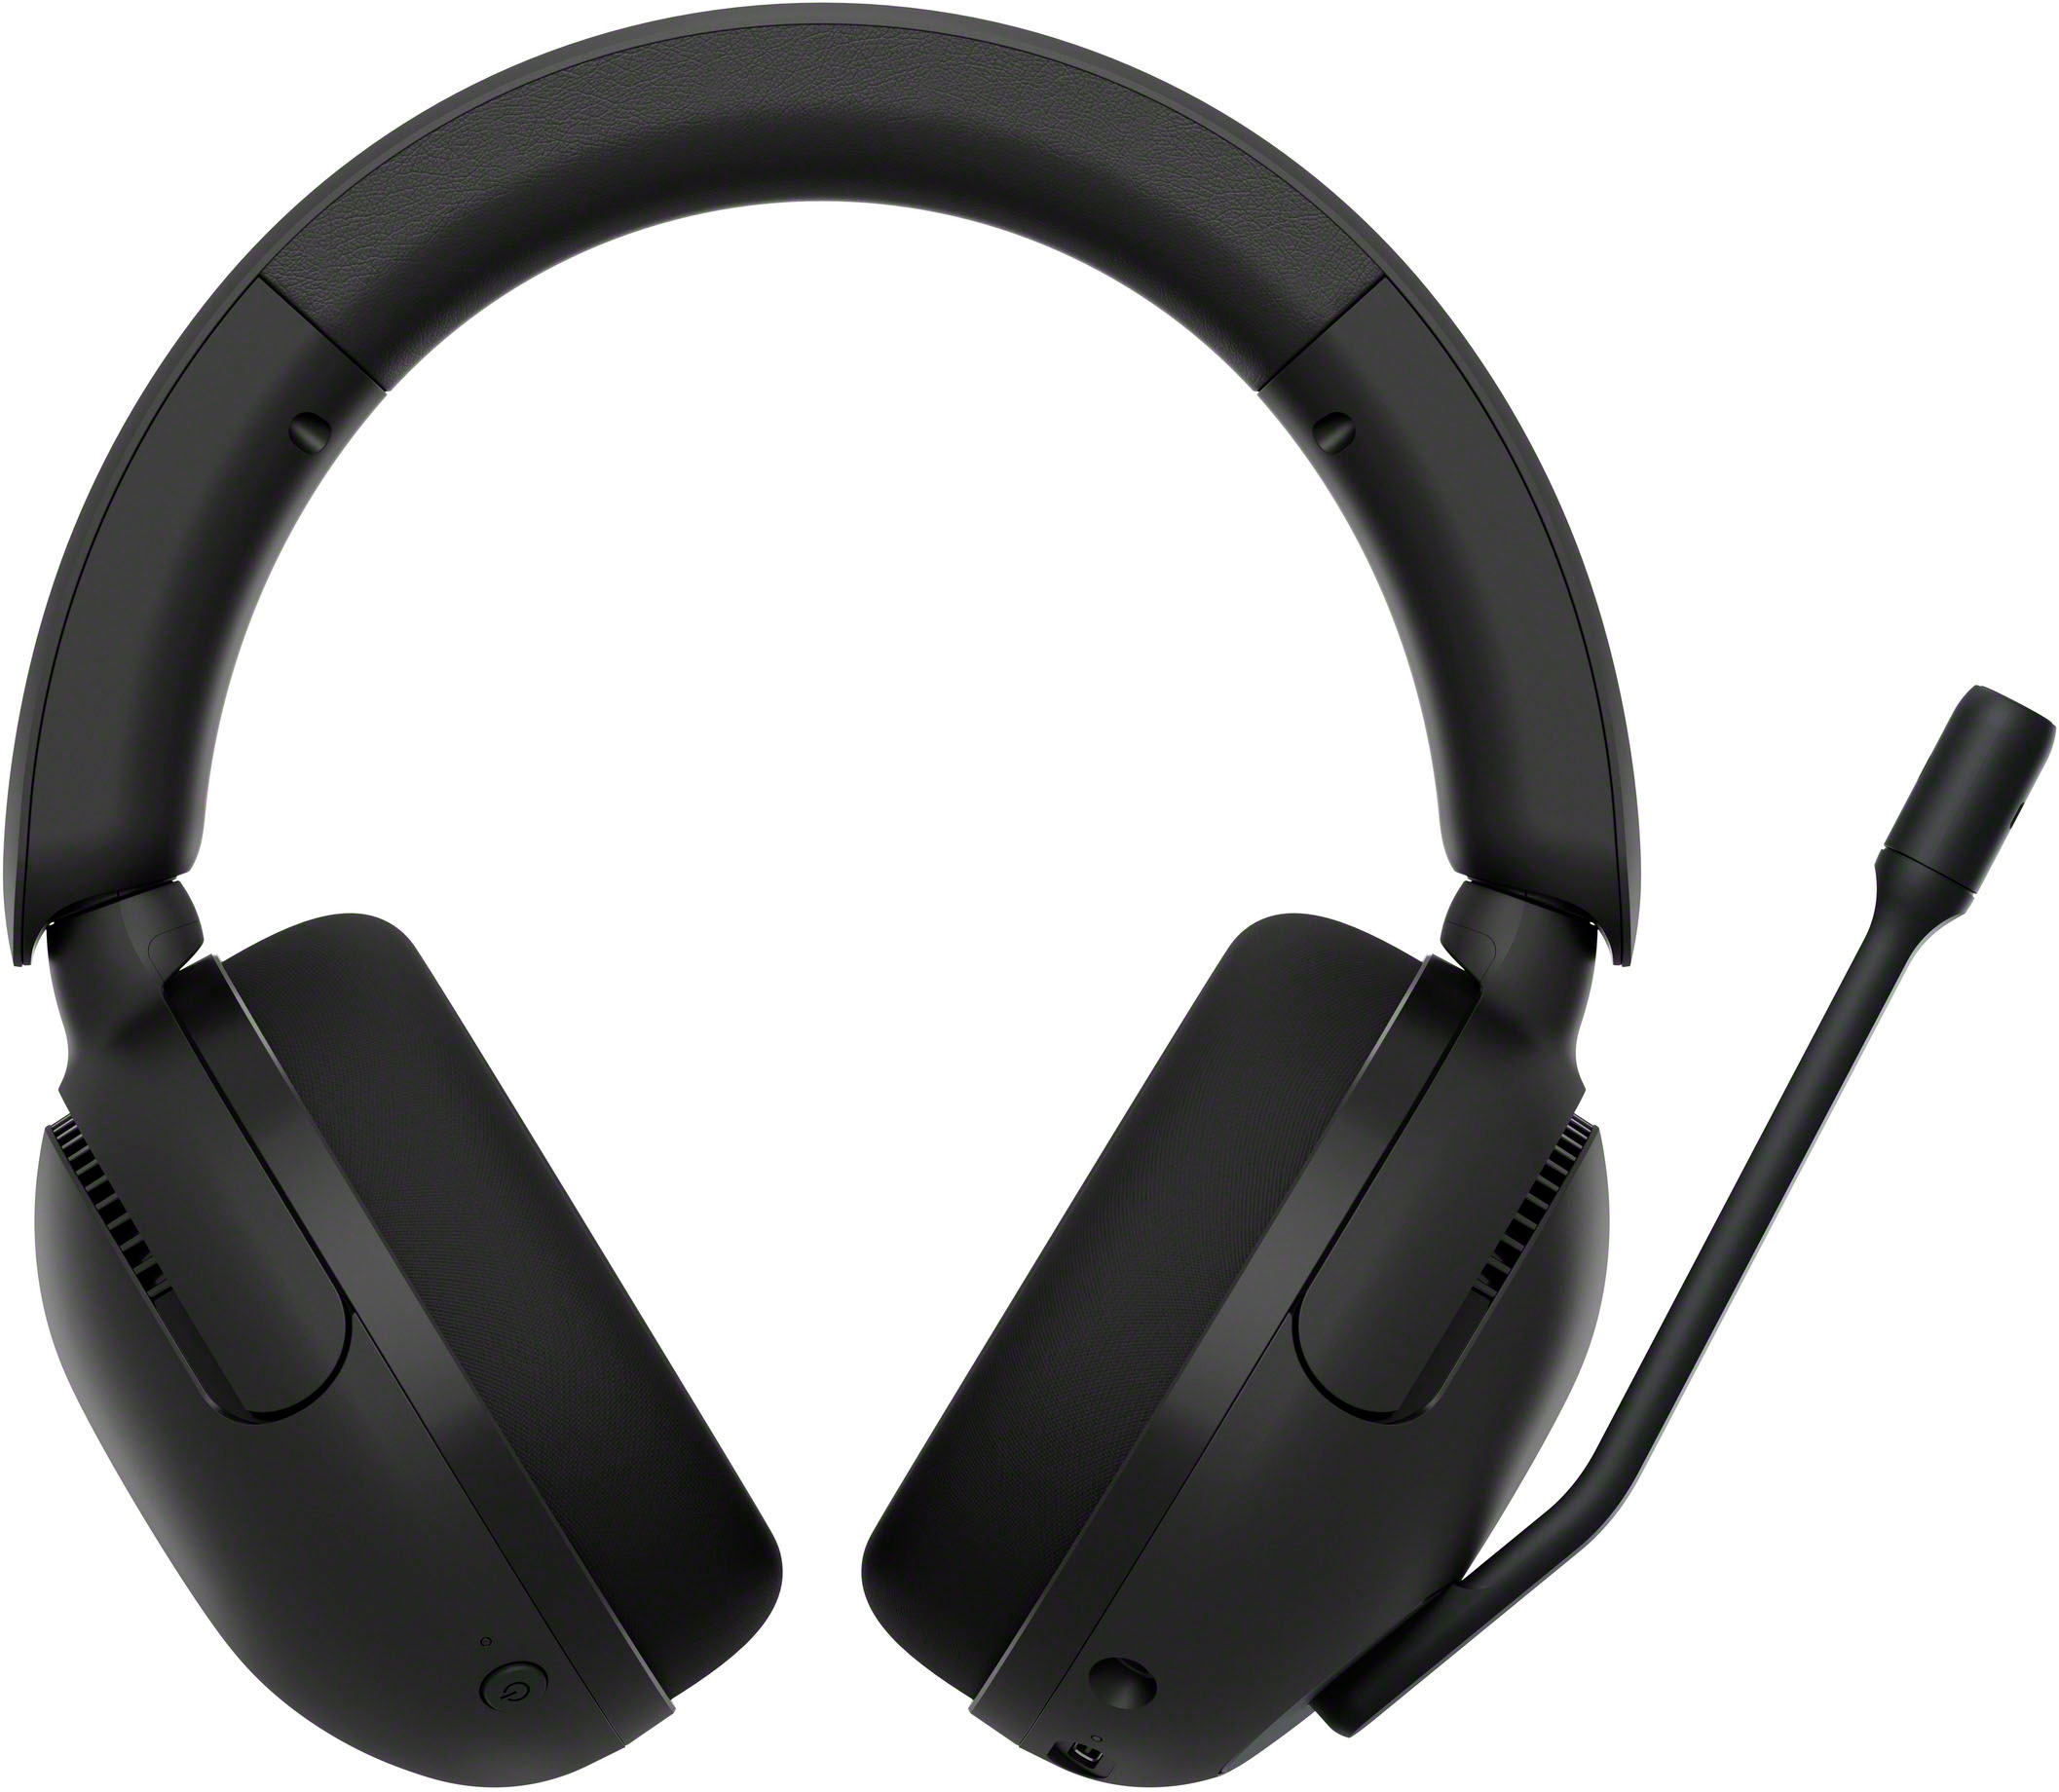 Angle View: Sony - INZONE H5 Wireless Gaming Headset - Black